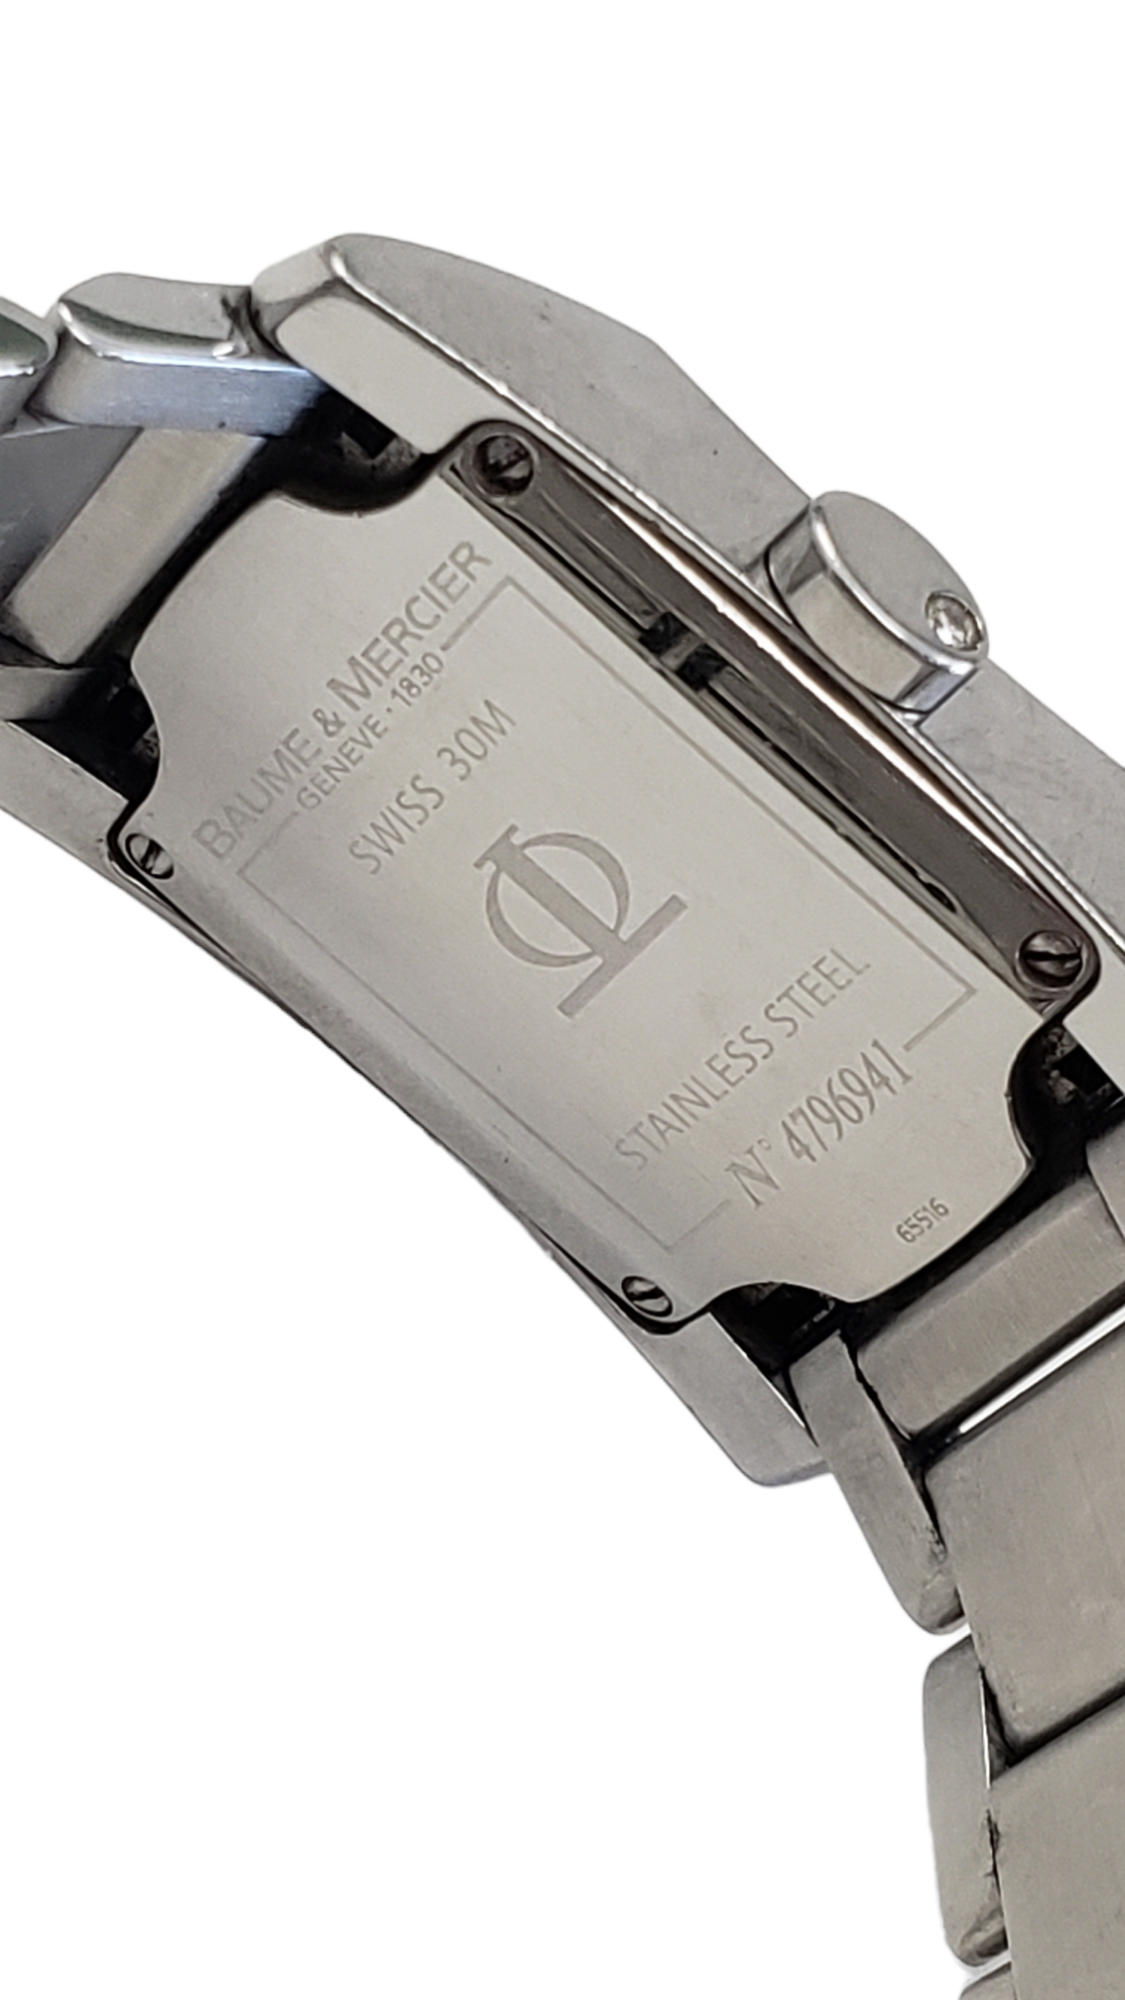 Baume & Mercier Ladies Hampton Diamond Accented Wrist Watch 22mm MOP 65516